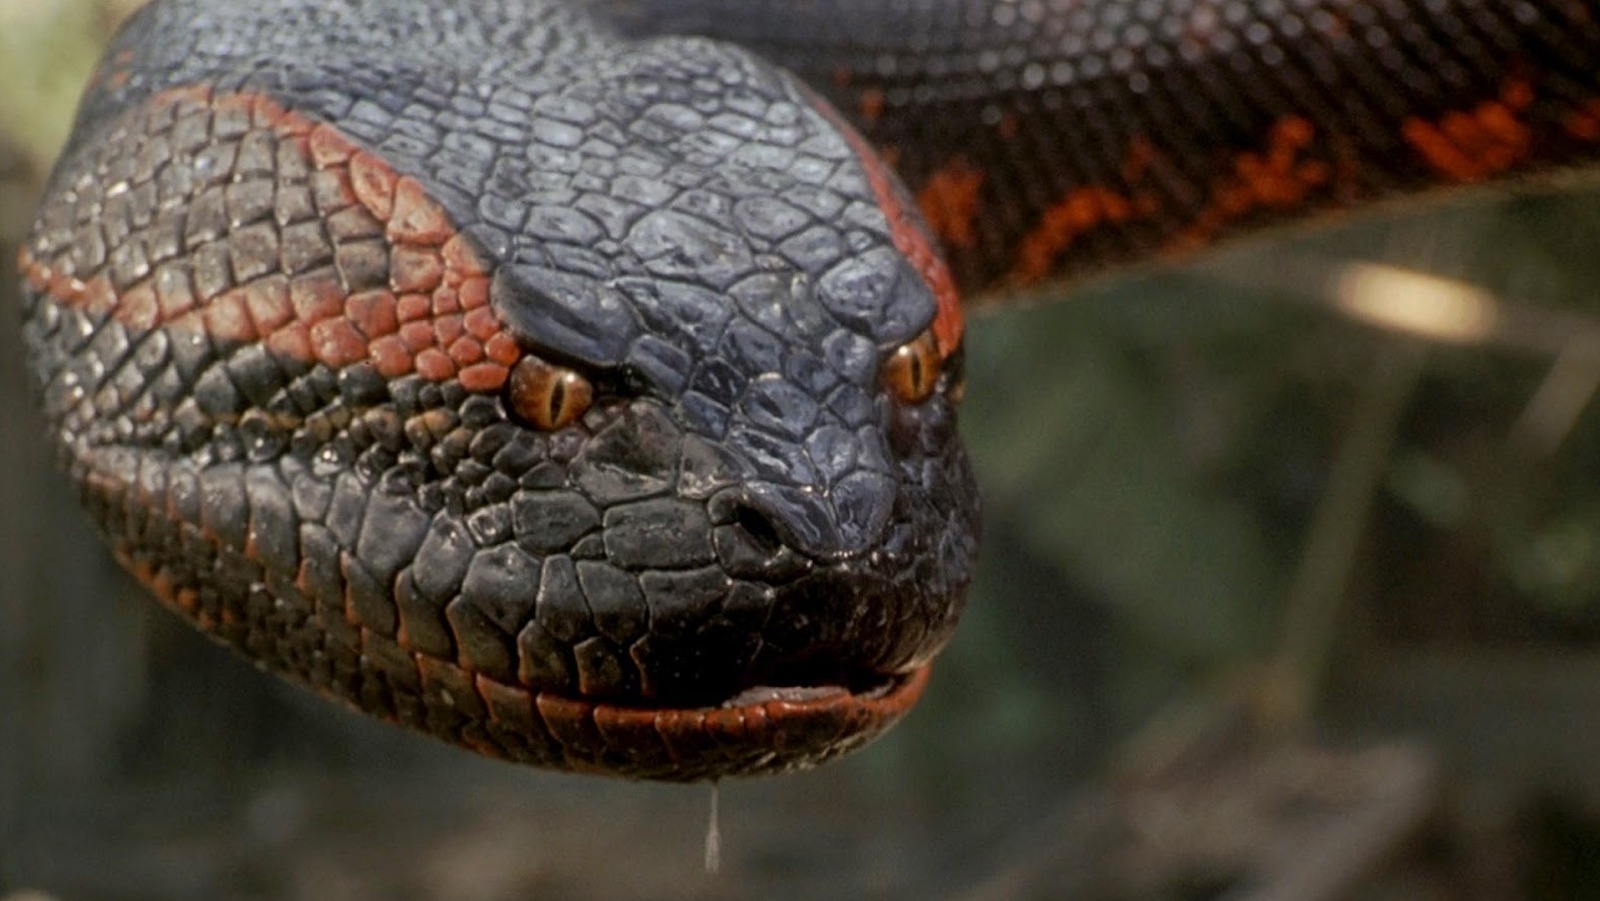 Anaconda's Animatronic Snake Wasn't Easy To Work With